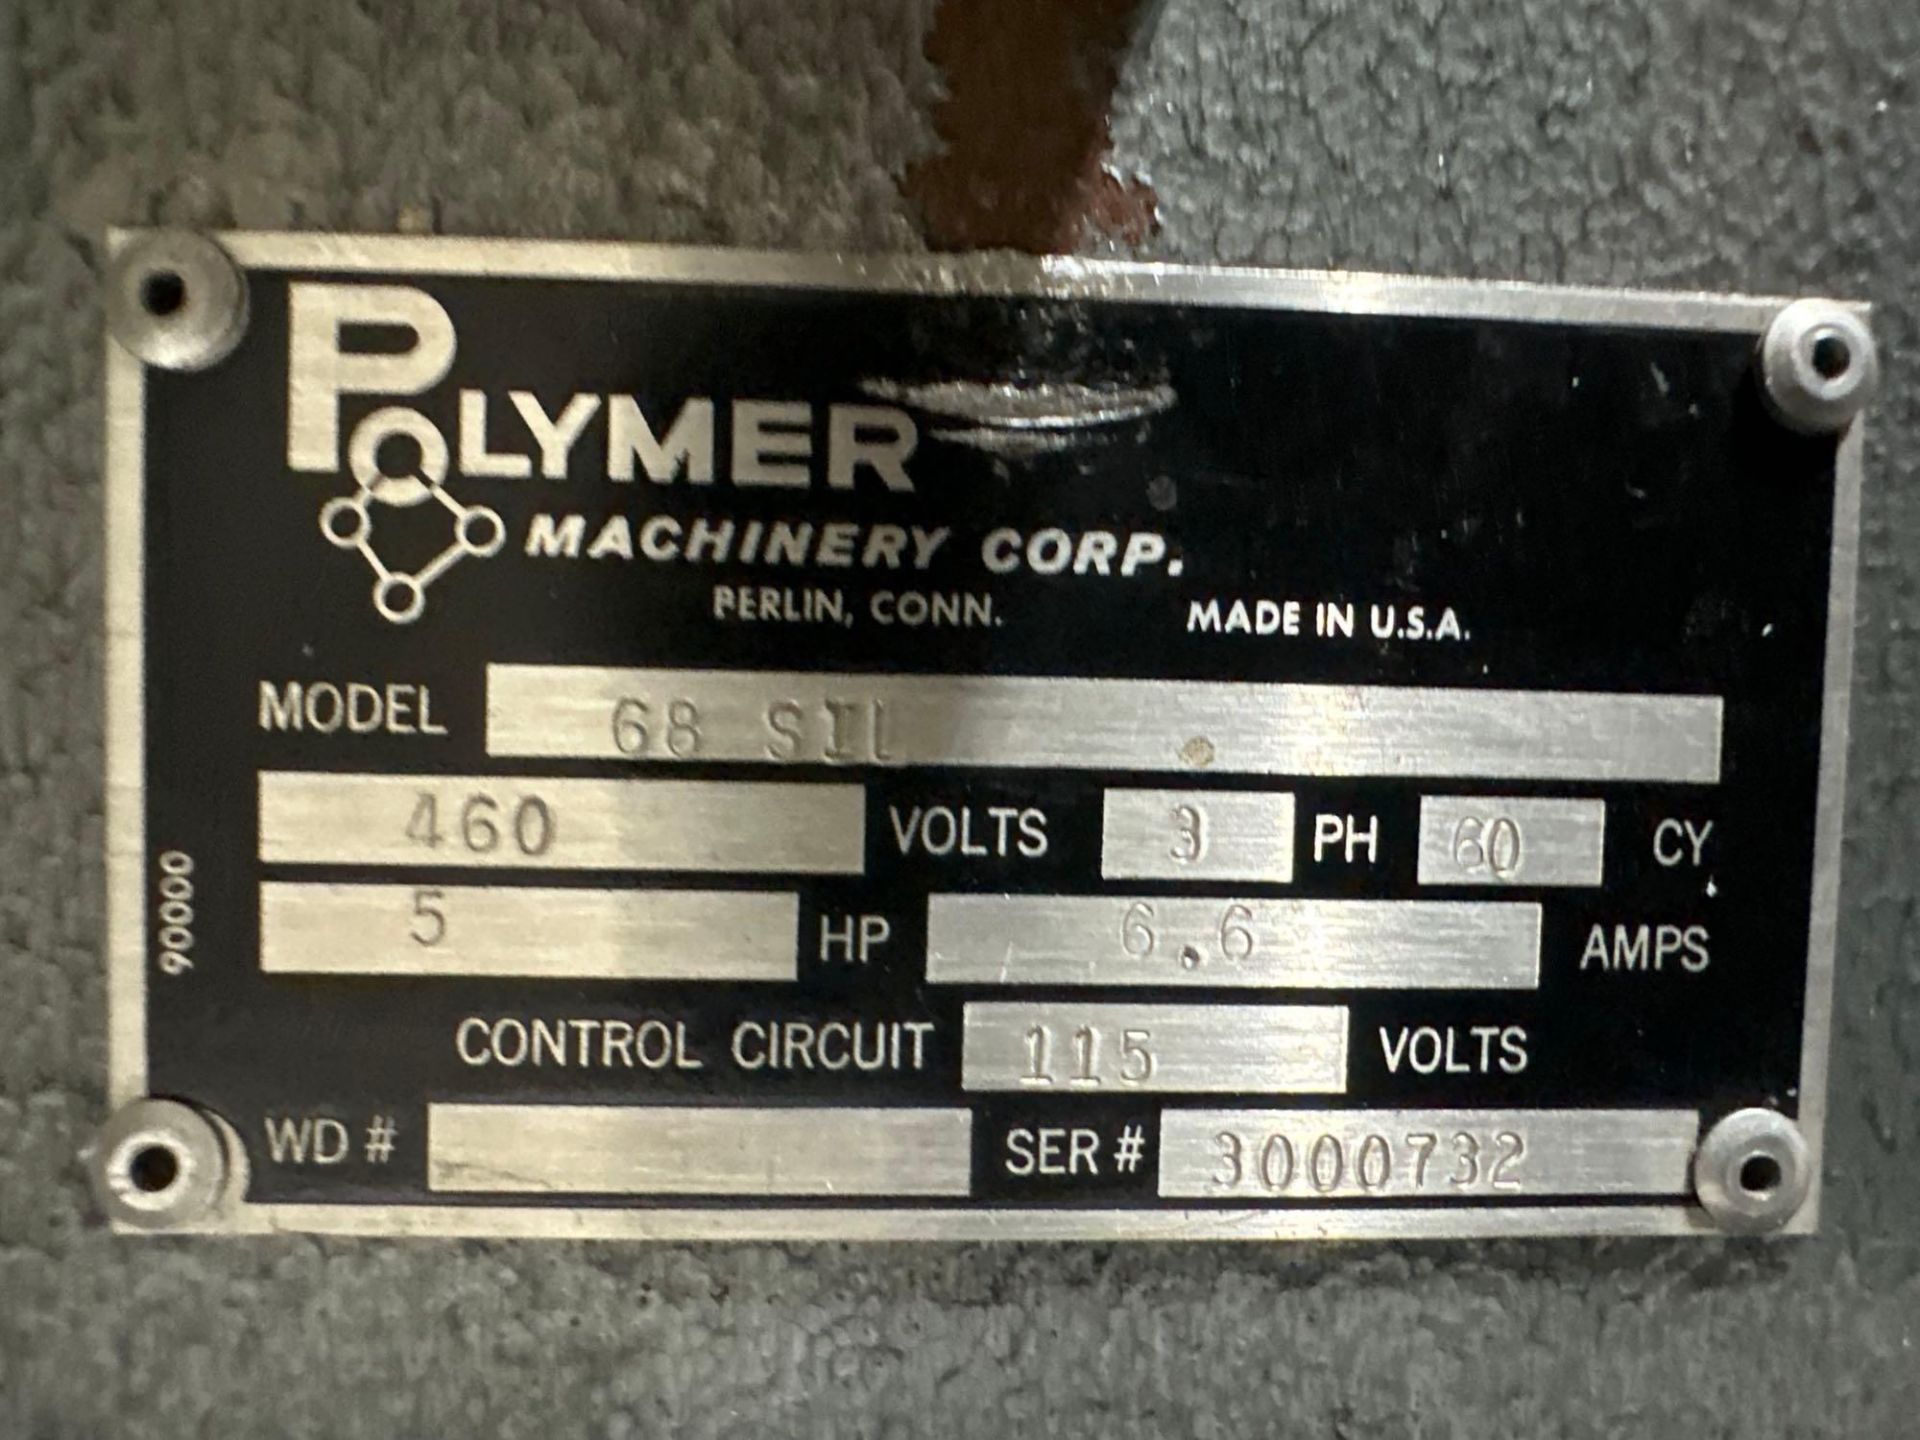 Polymer 68 SIL Granulator, 5HP, 460V, 8" x 8" Chamber, 2 Rotating Blades, 1 Stationery Blade - Image 5 of 5